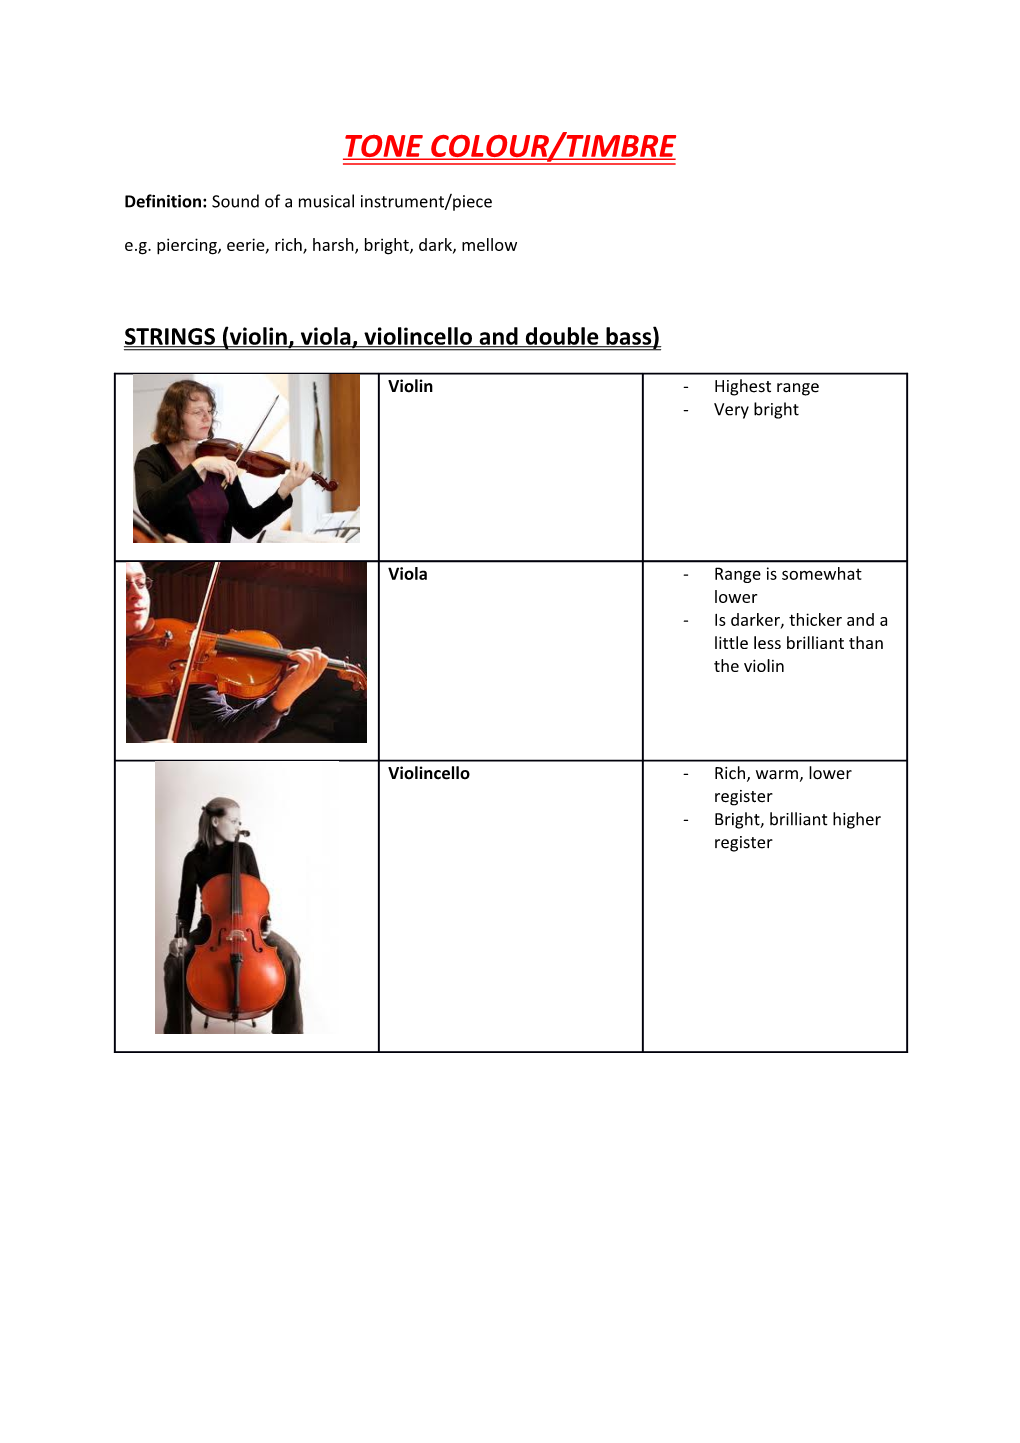 STRINGS (Violin, Viola, Violincello and Double Bass)